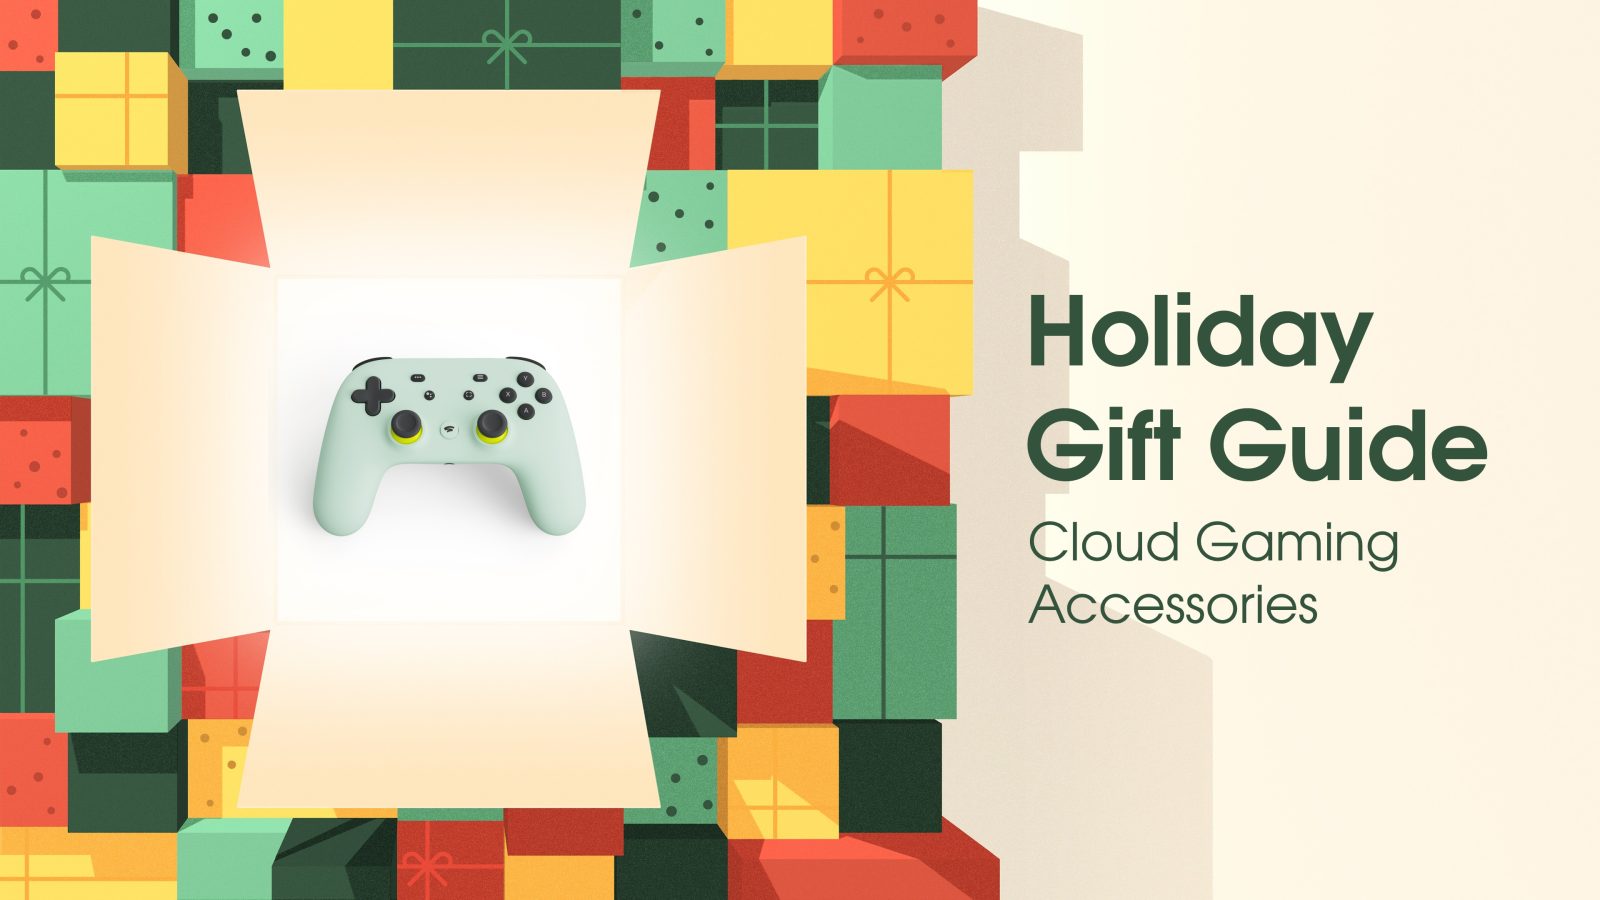 Cloud Gaming Gift Guide